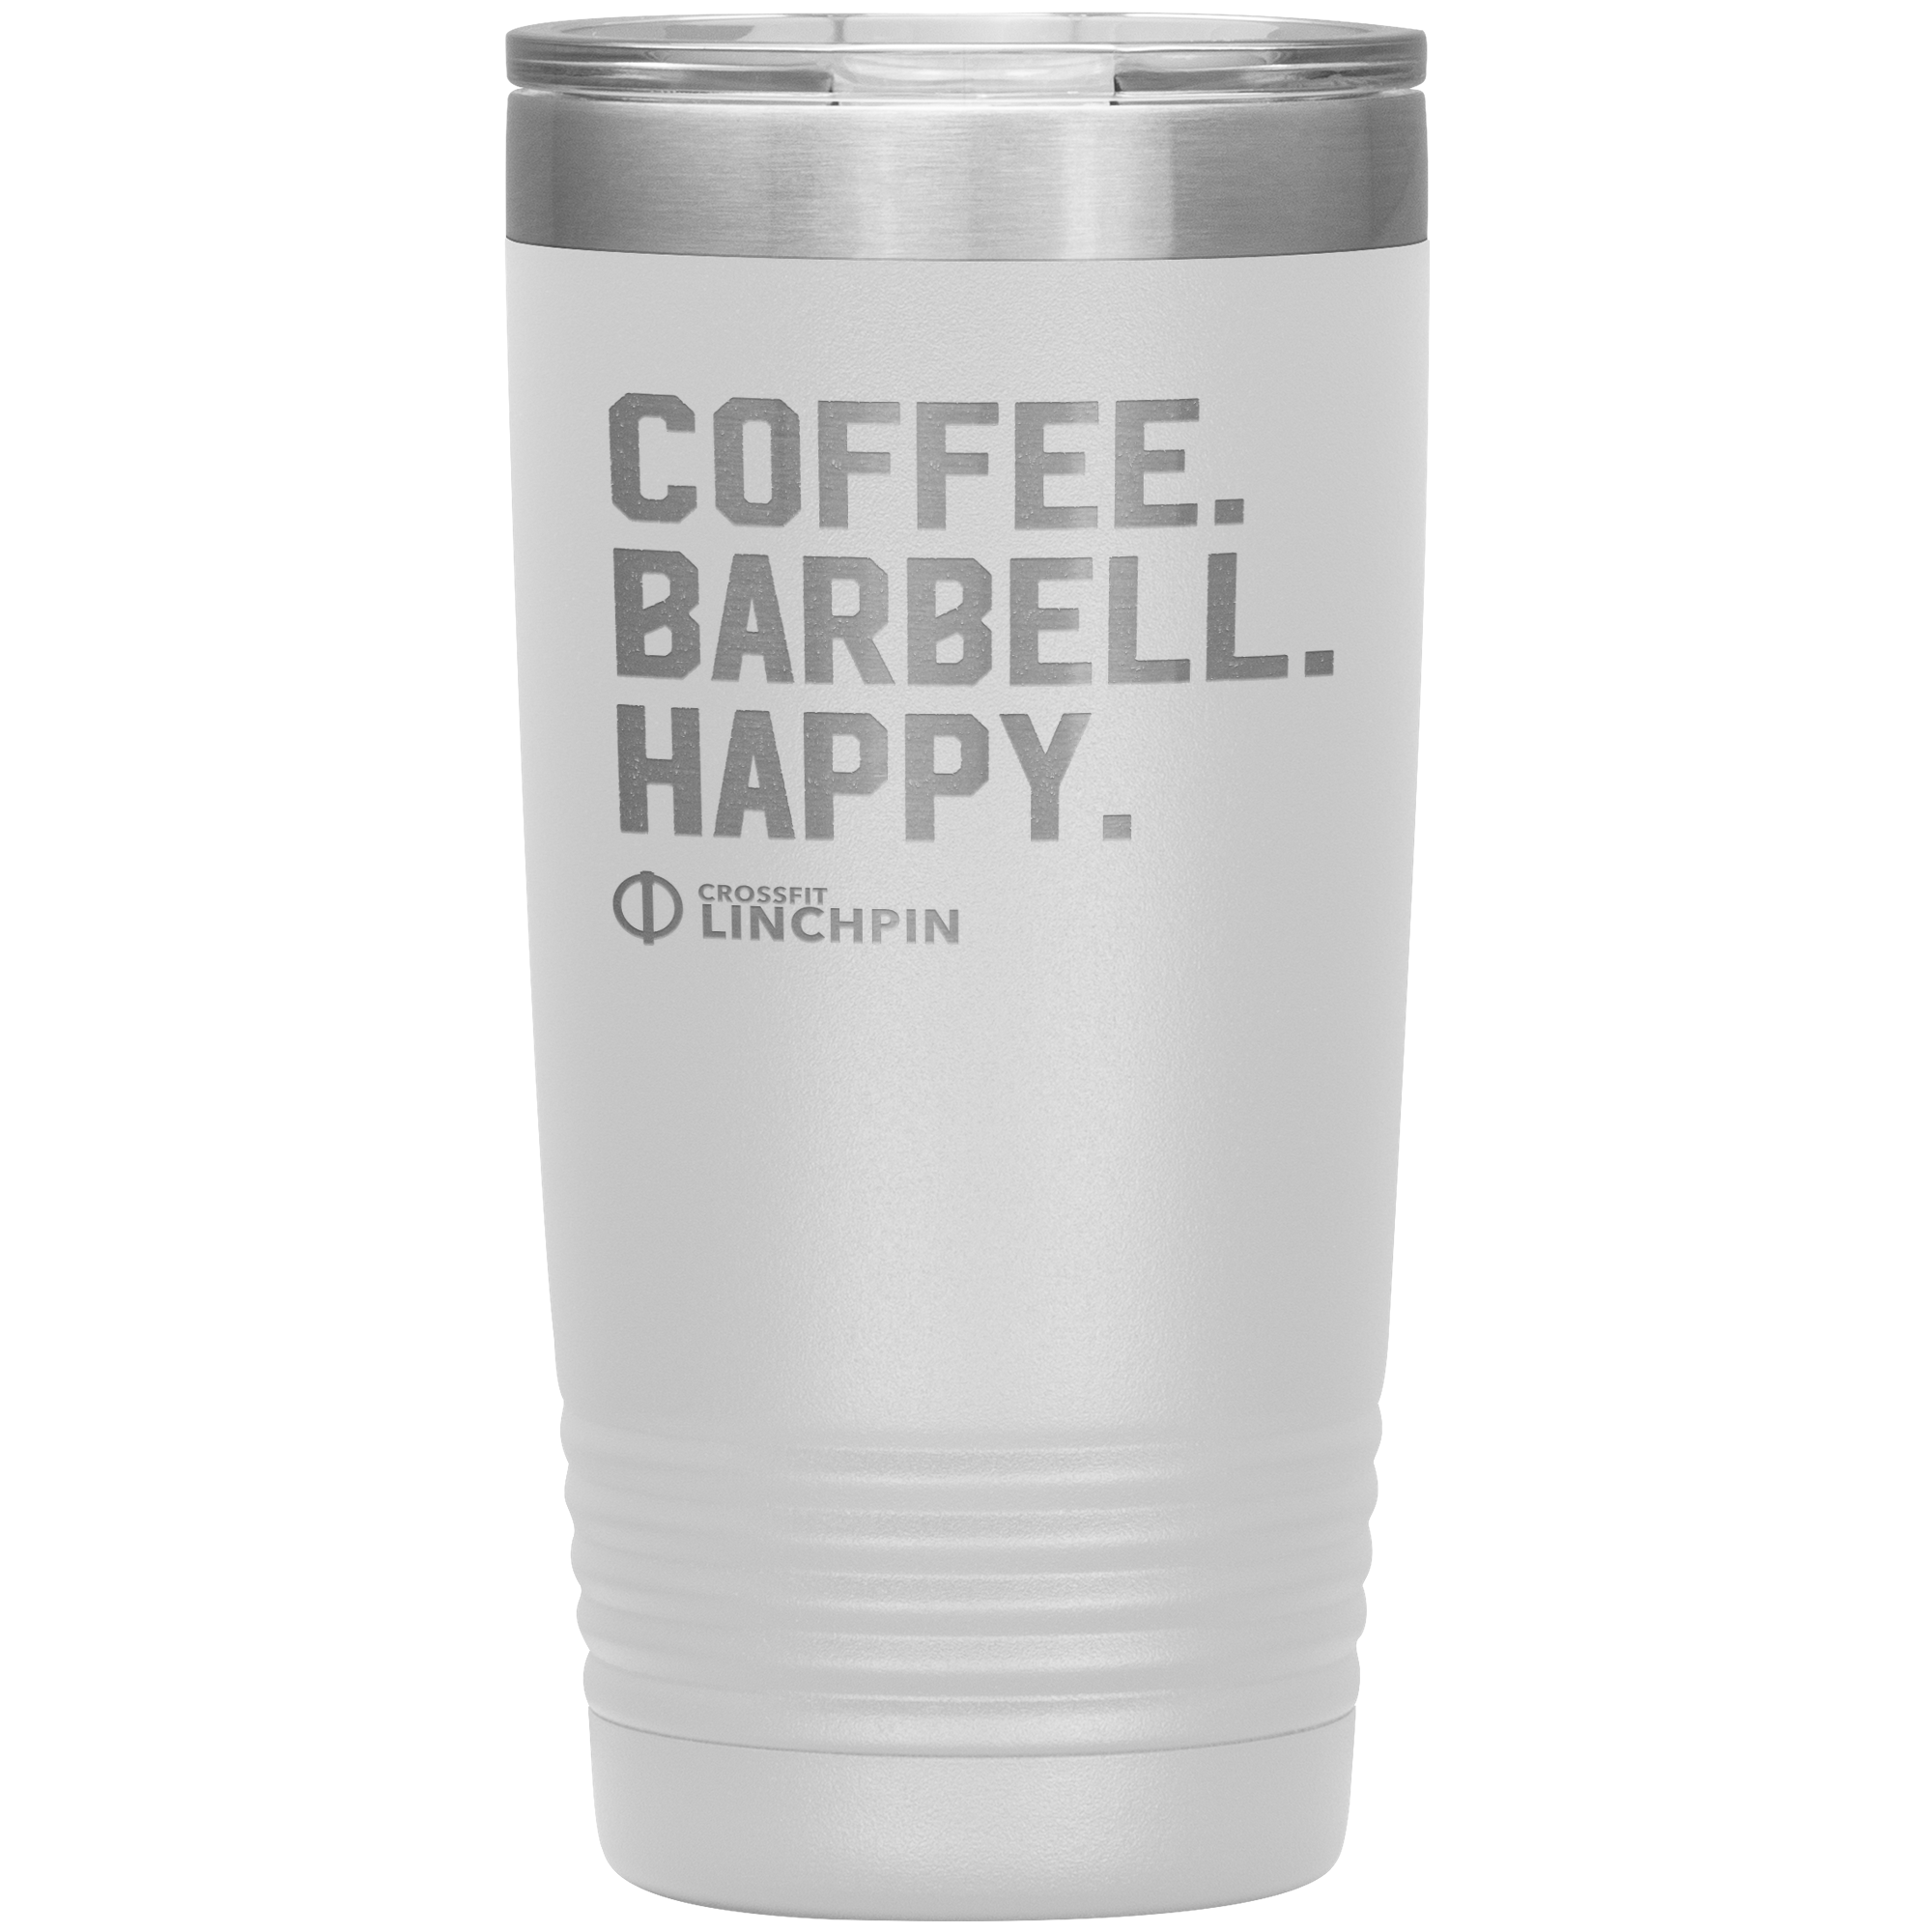 Coffee. Barbell. Happy. - 20oz Tumbler